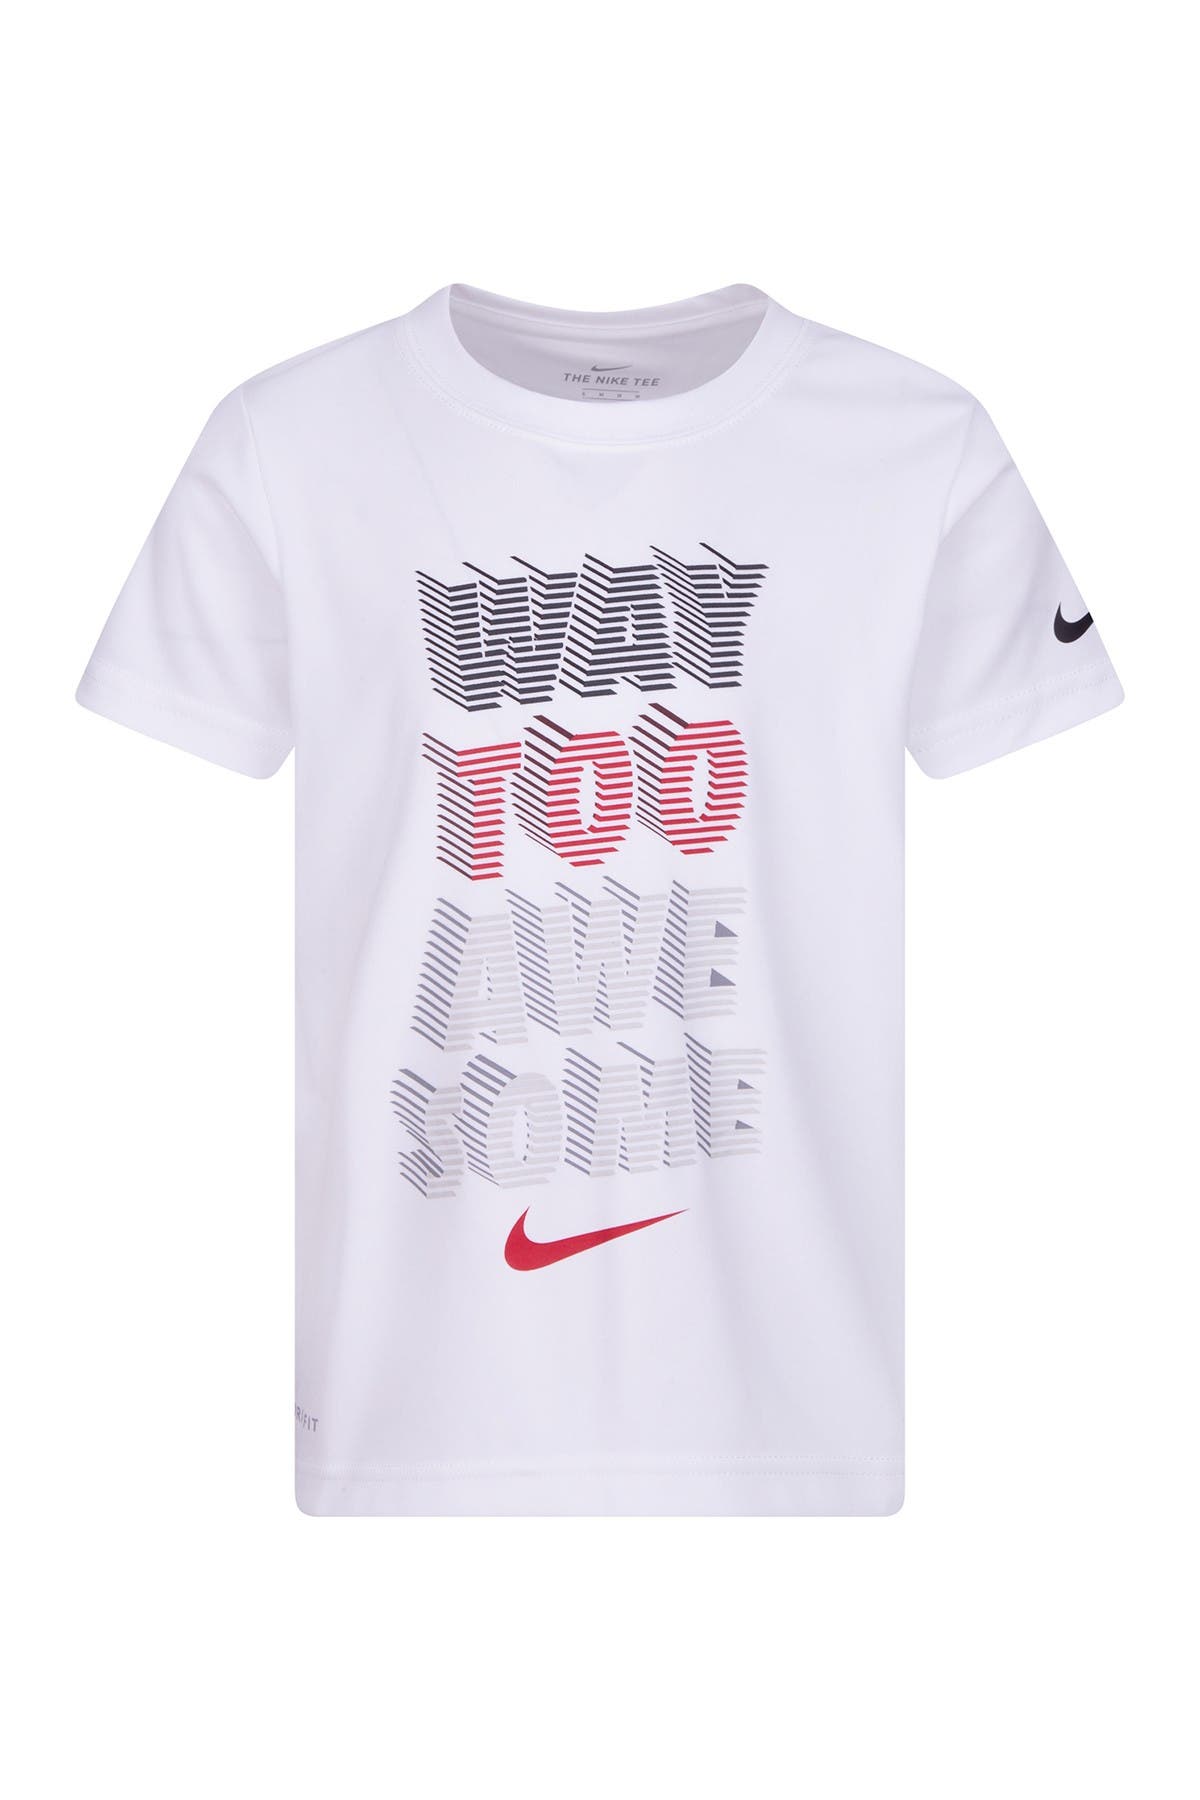 Nike | Dri-FIT Graphic T-Shirt 